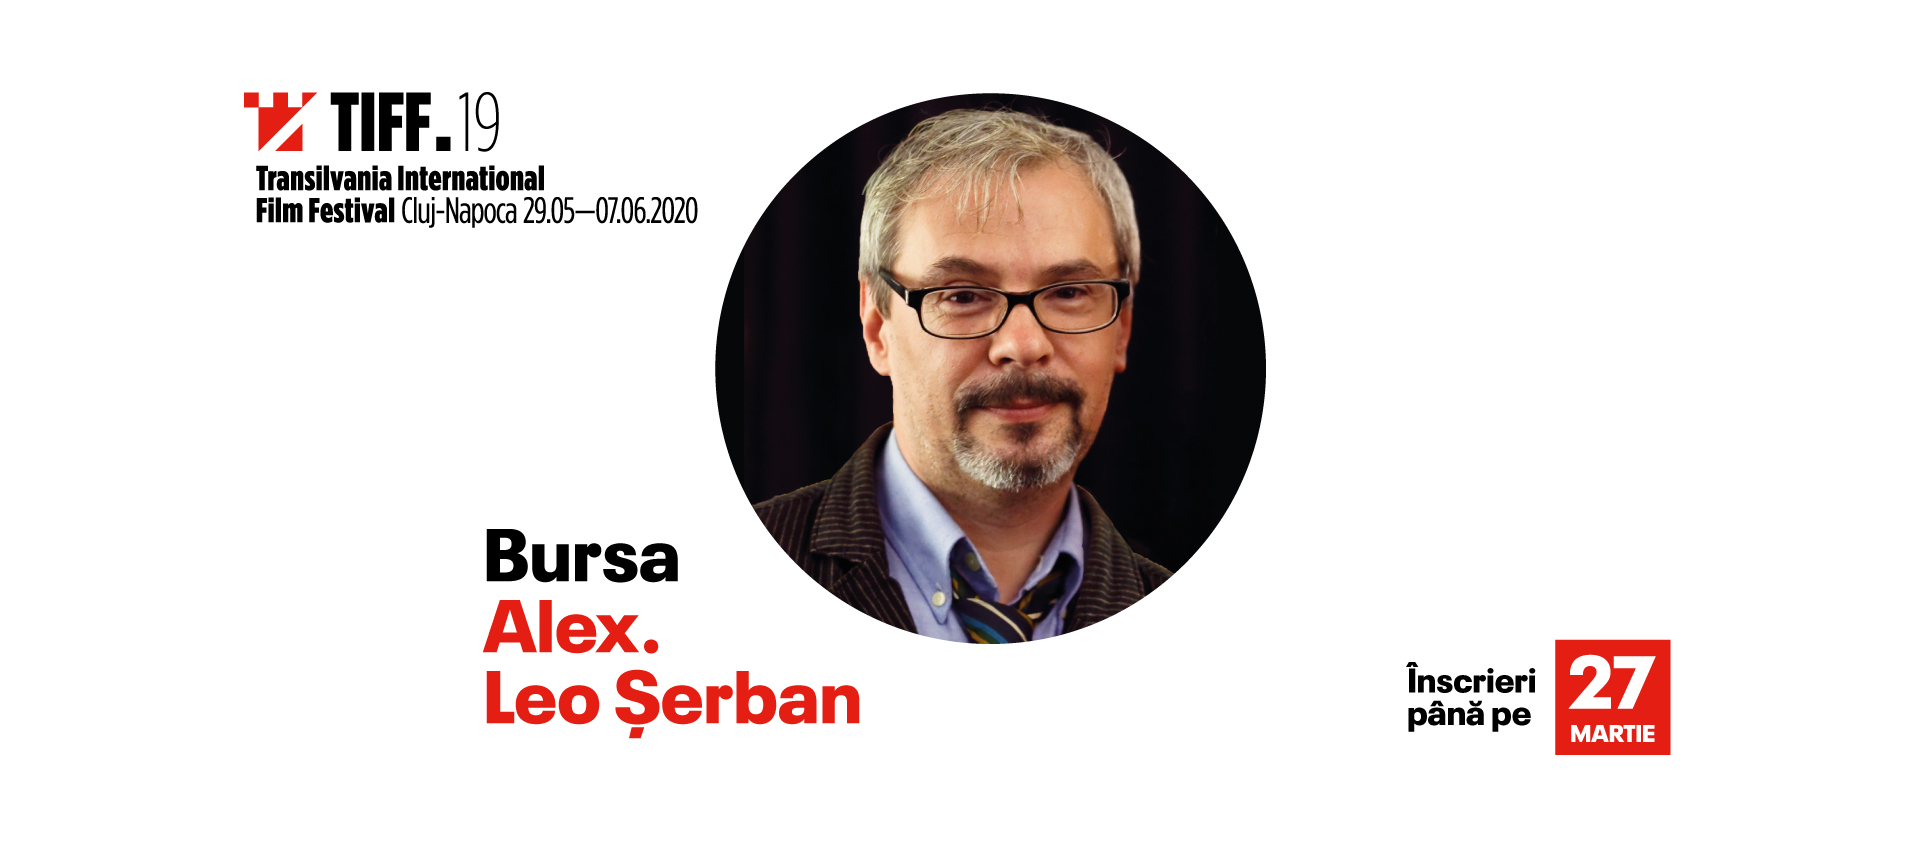 Bursa_Alex Leo Serban_deadline extins